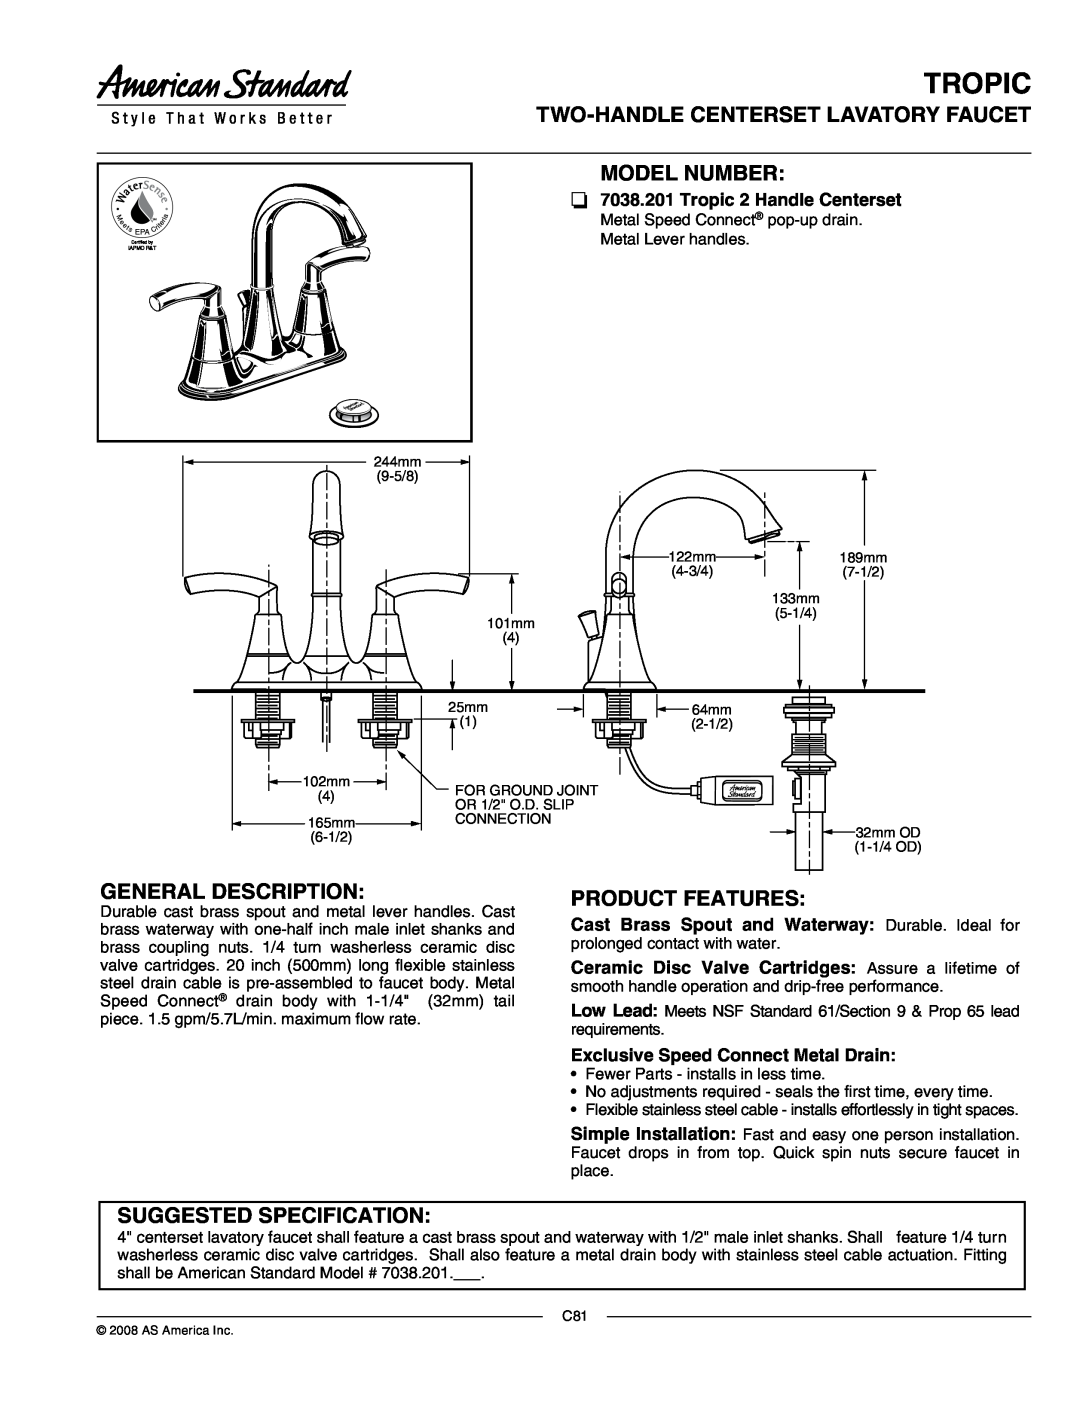 American Standard 7028.201 manual Tropic, Two-Handlecenterset Lavatory Faucet Model Number, General Description 